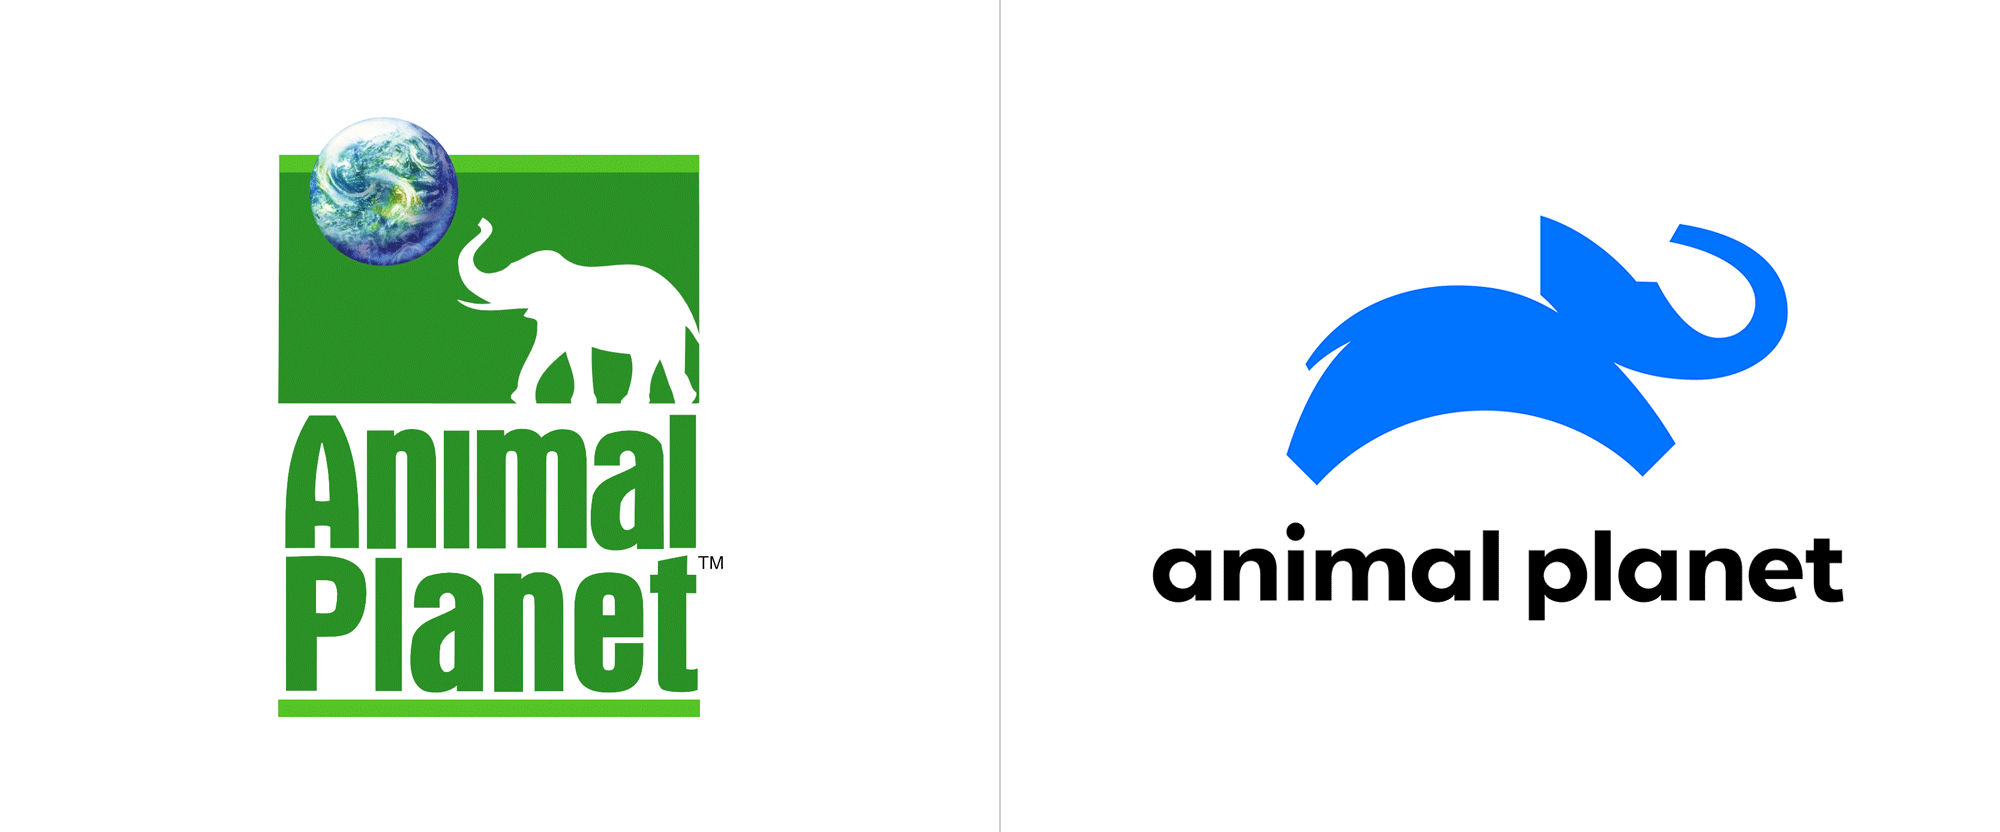 Google Old Logo - Brand New: New Logo for Animal Planet by Chermayeff & Geismar & Haviv